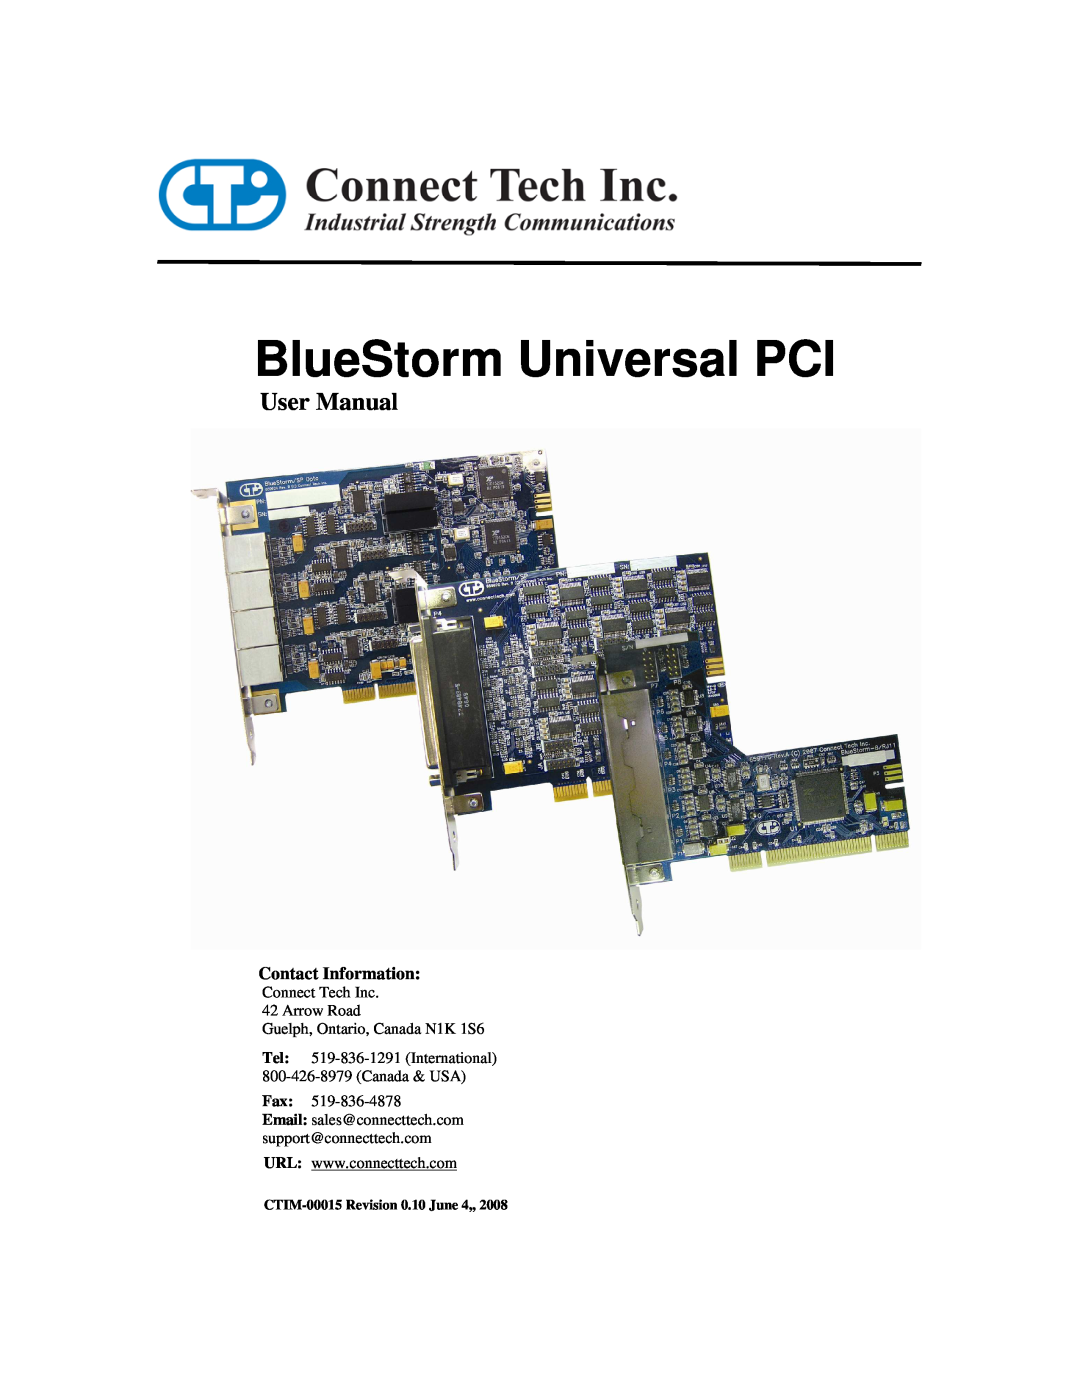 Connect Tech BlueStorm Universal PCI user manual User Manual, Contact Information, CTIM-00015 Revision 0.10 June 4 